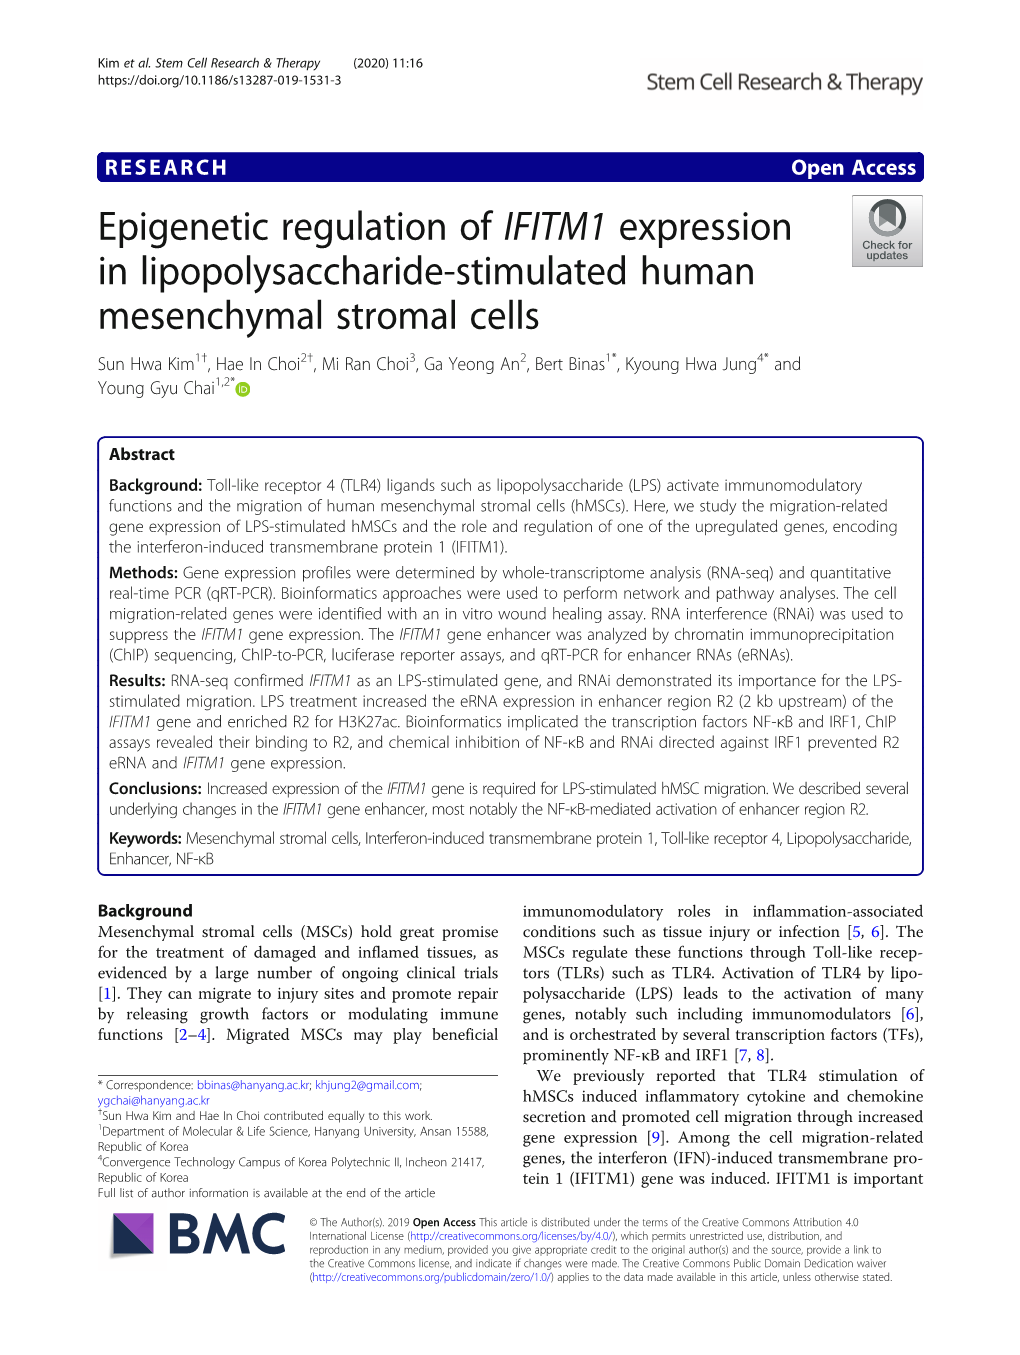 Epigenetic Regulation of IFITM1 Expression in Lipopolysaccharide-Stimulated Human Mesenchymal Stromal Cells